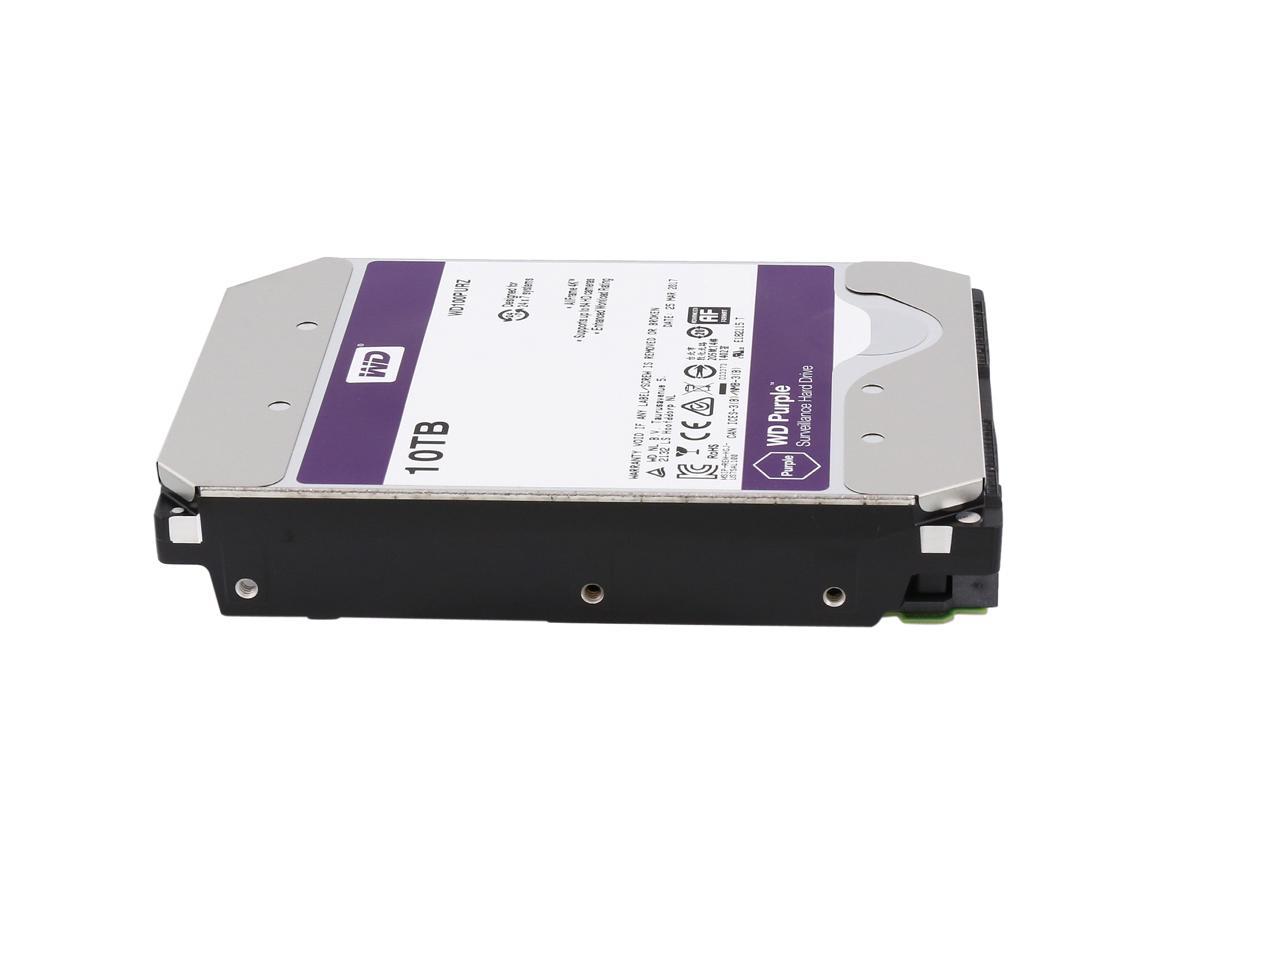 WD100PURZ Intellipower SATA 6 Gb/s 128MB Cache 3,5 Zoll WD Purple 10 TB Festplatte zur Videoüberwachung 